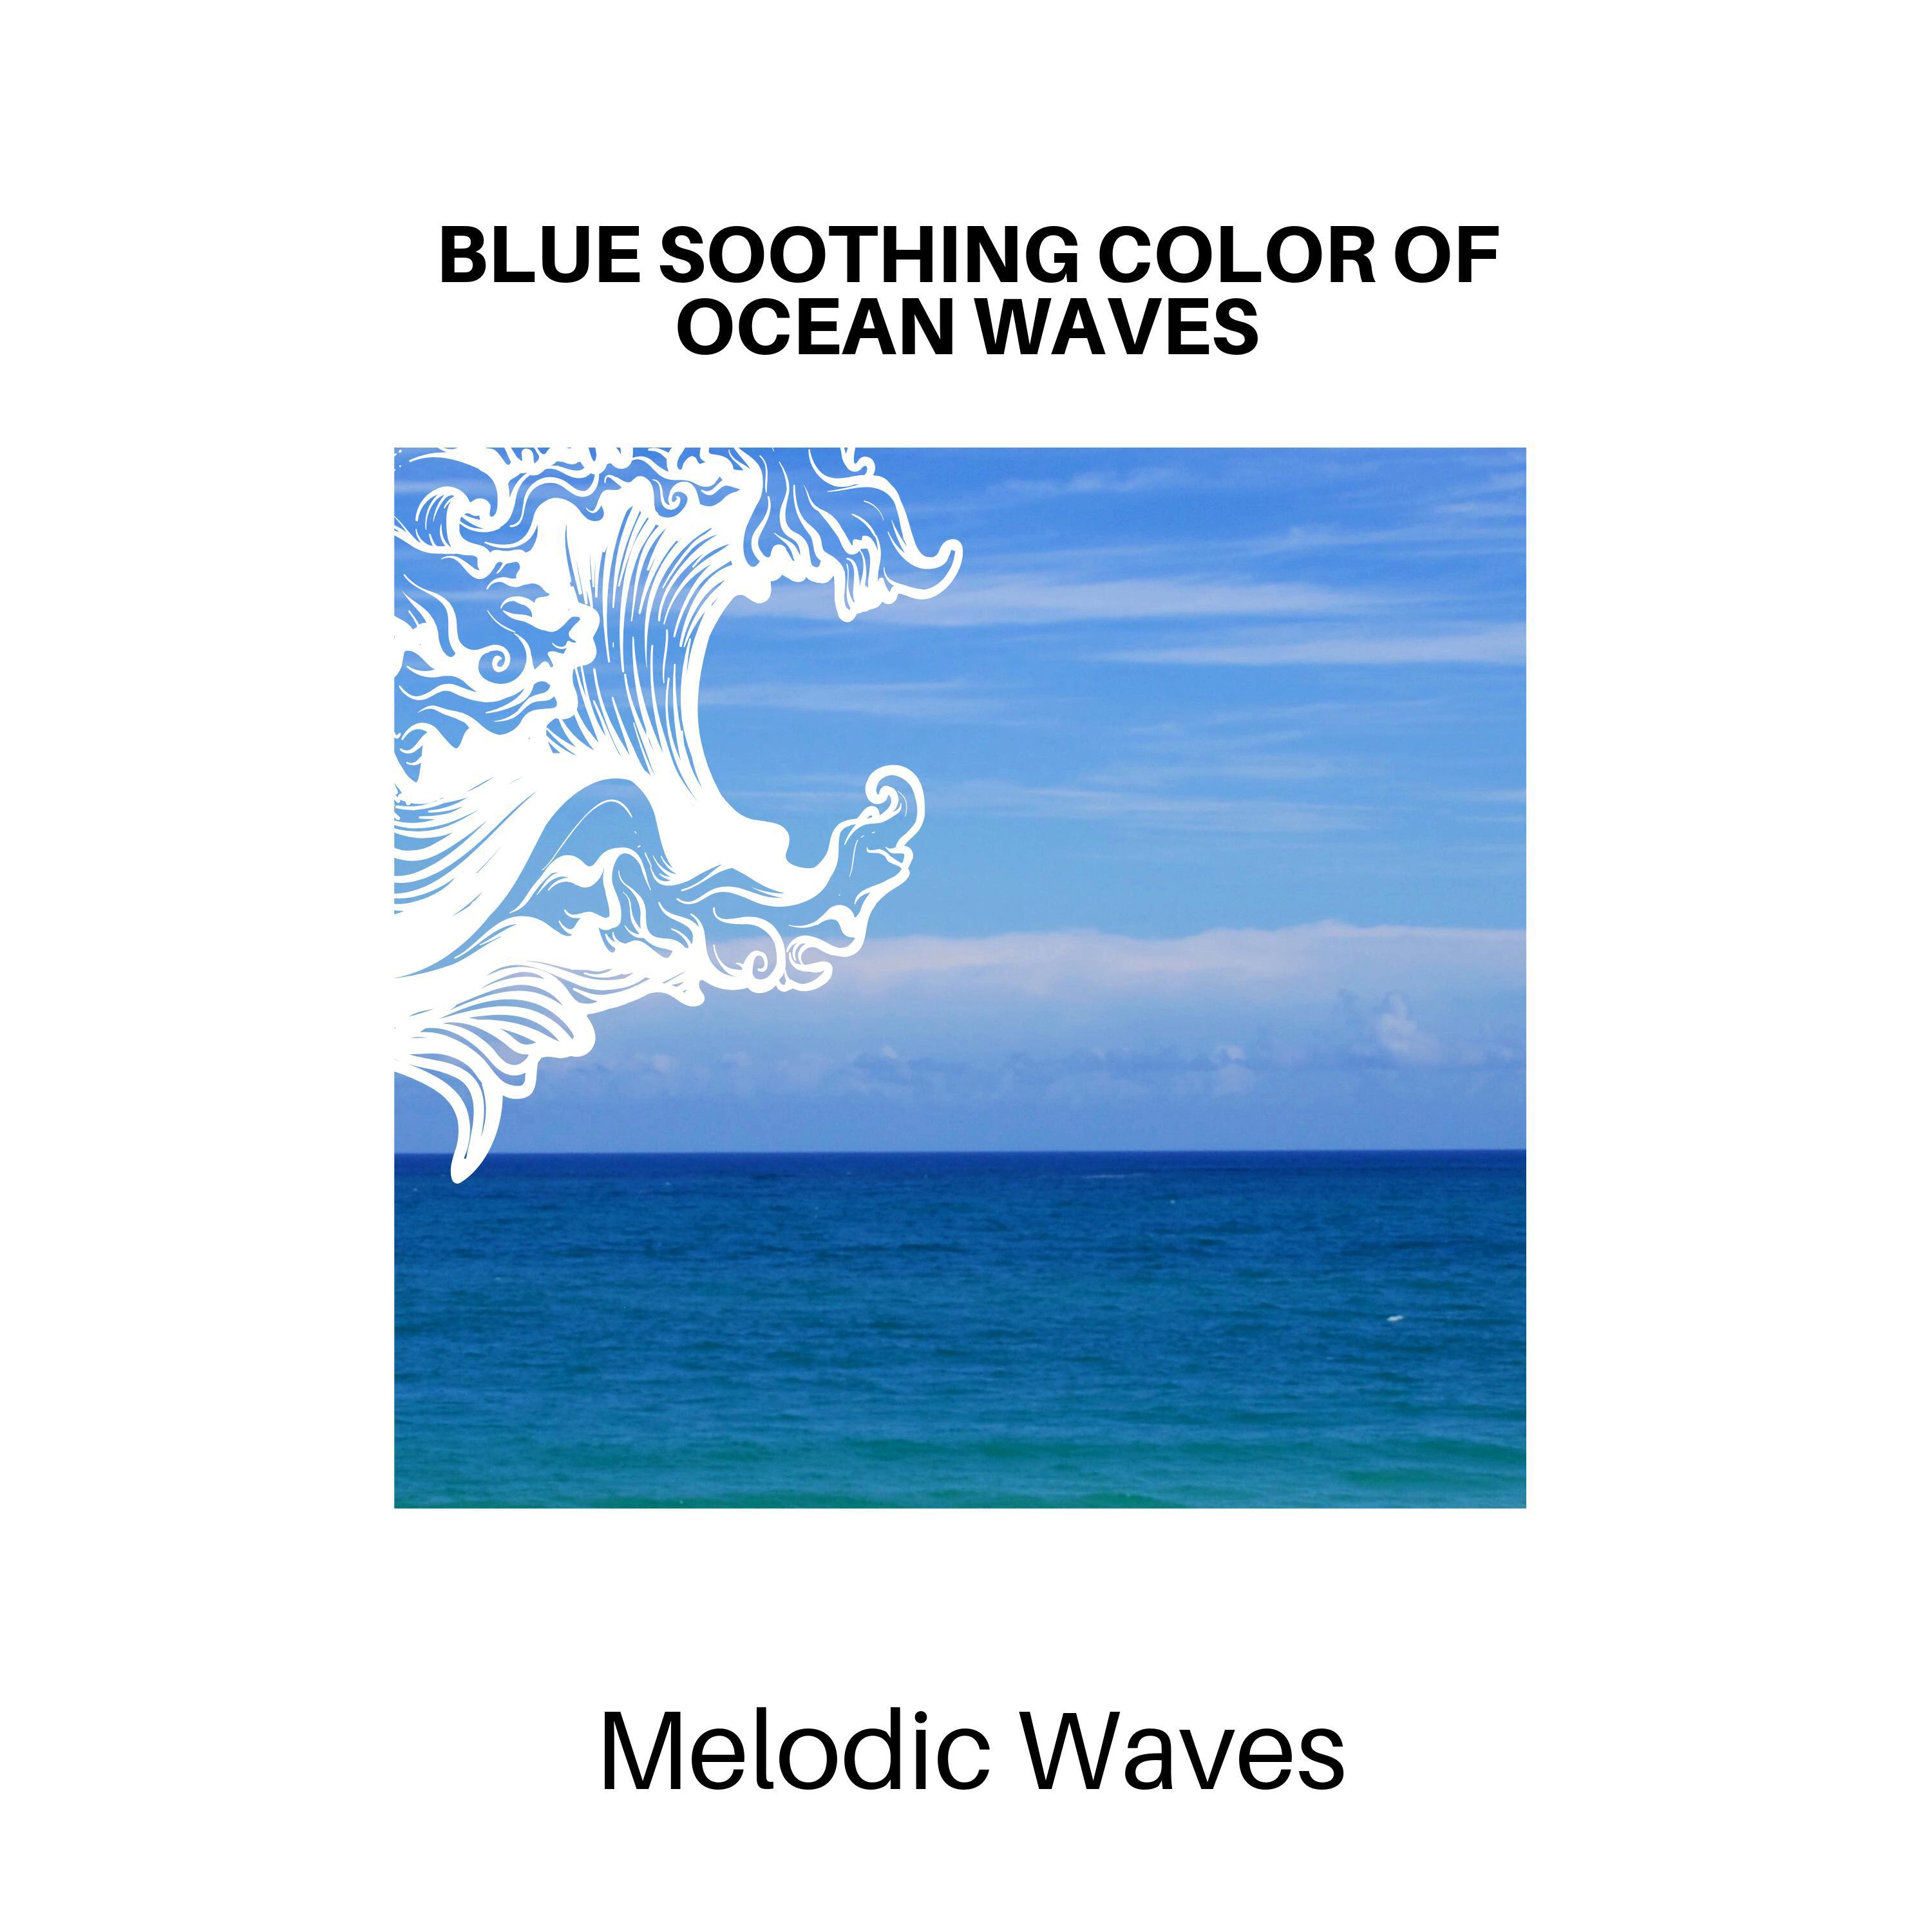 Calling Waves Music Project - Joyful Oceanic Birds Sound